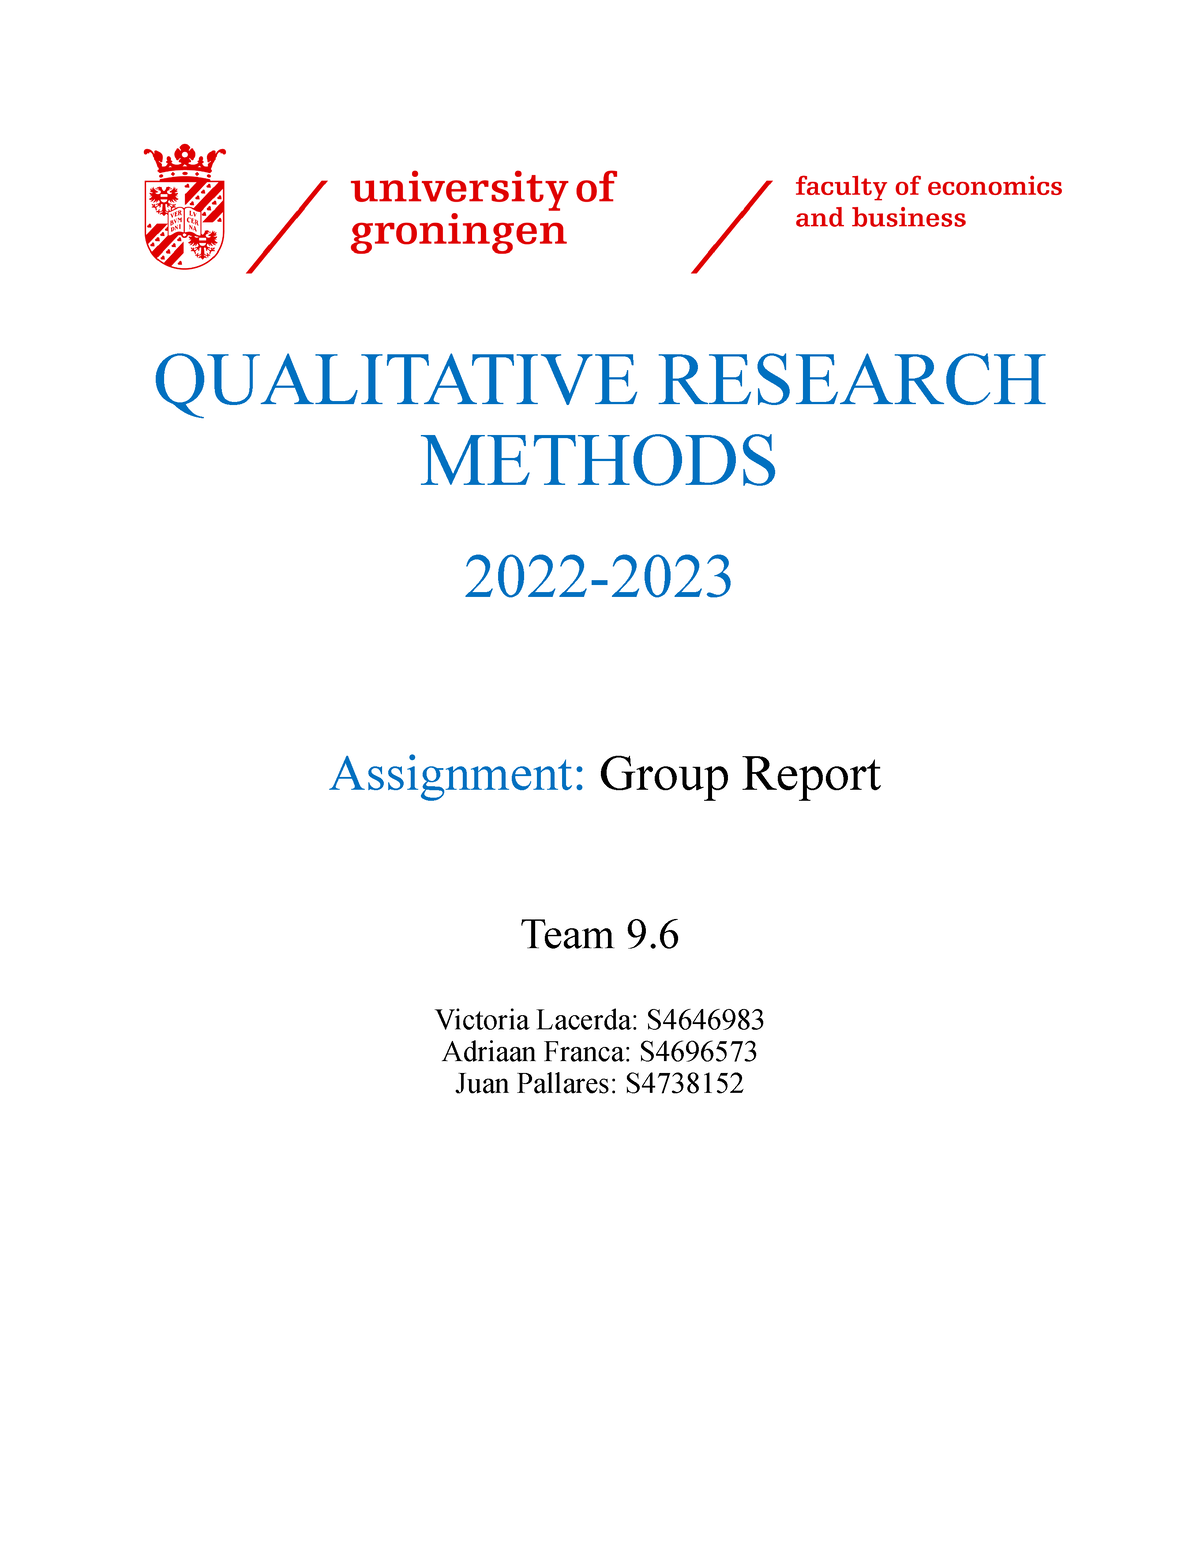 tenny 2022 qualitative research